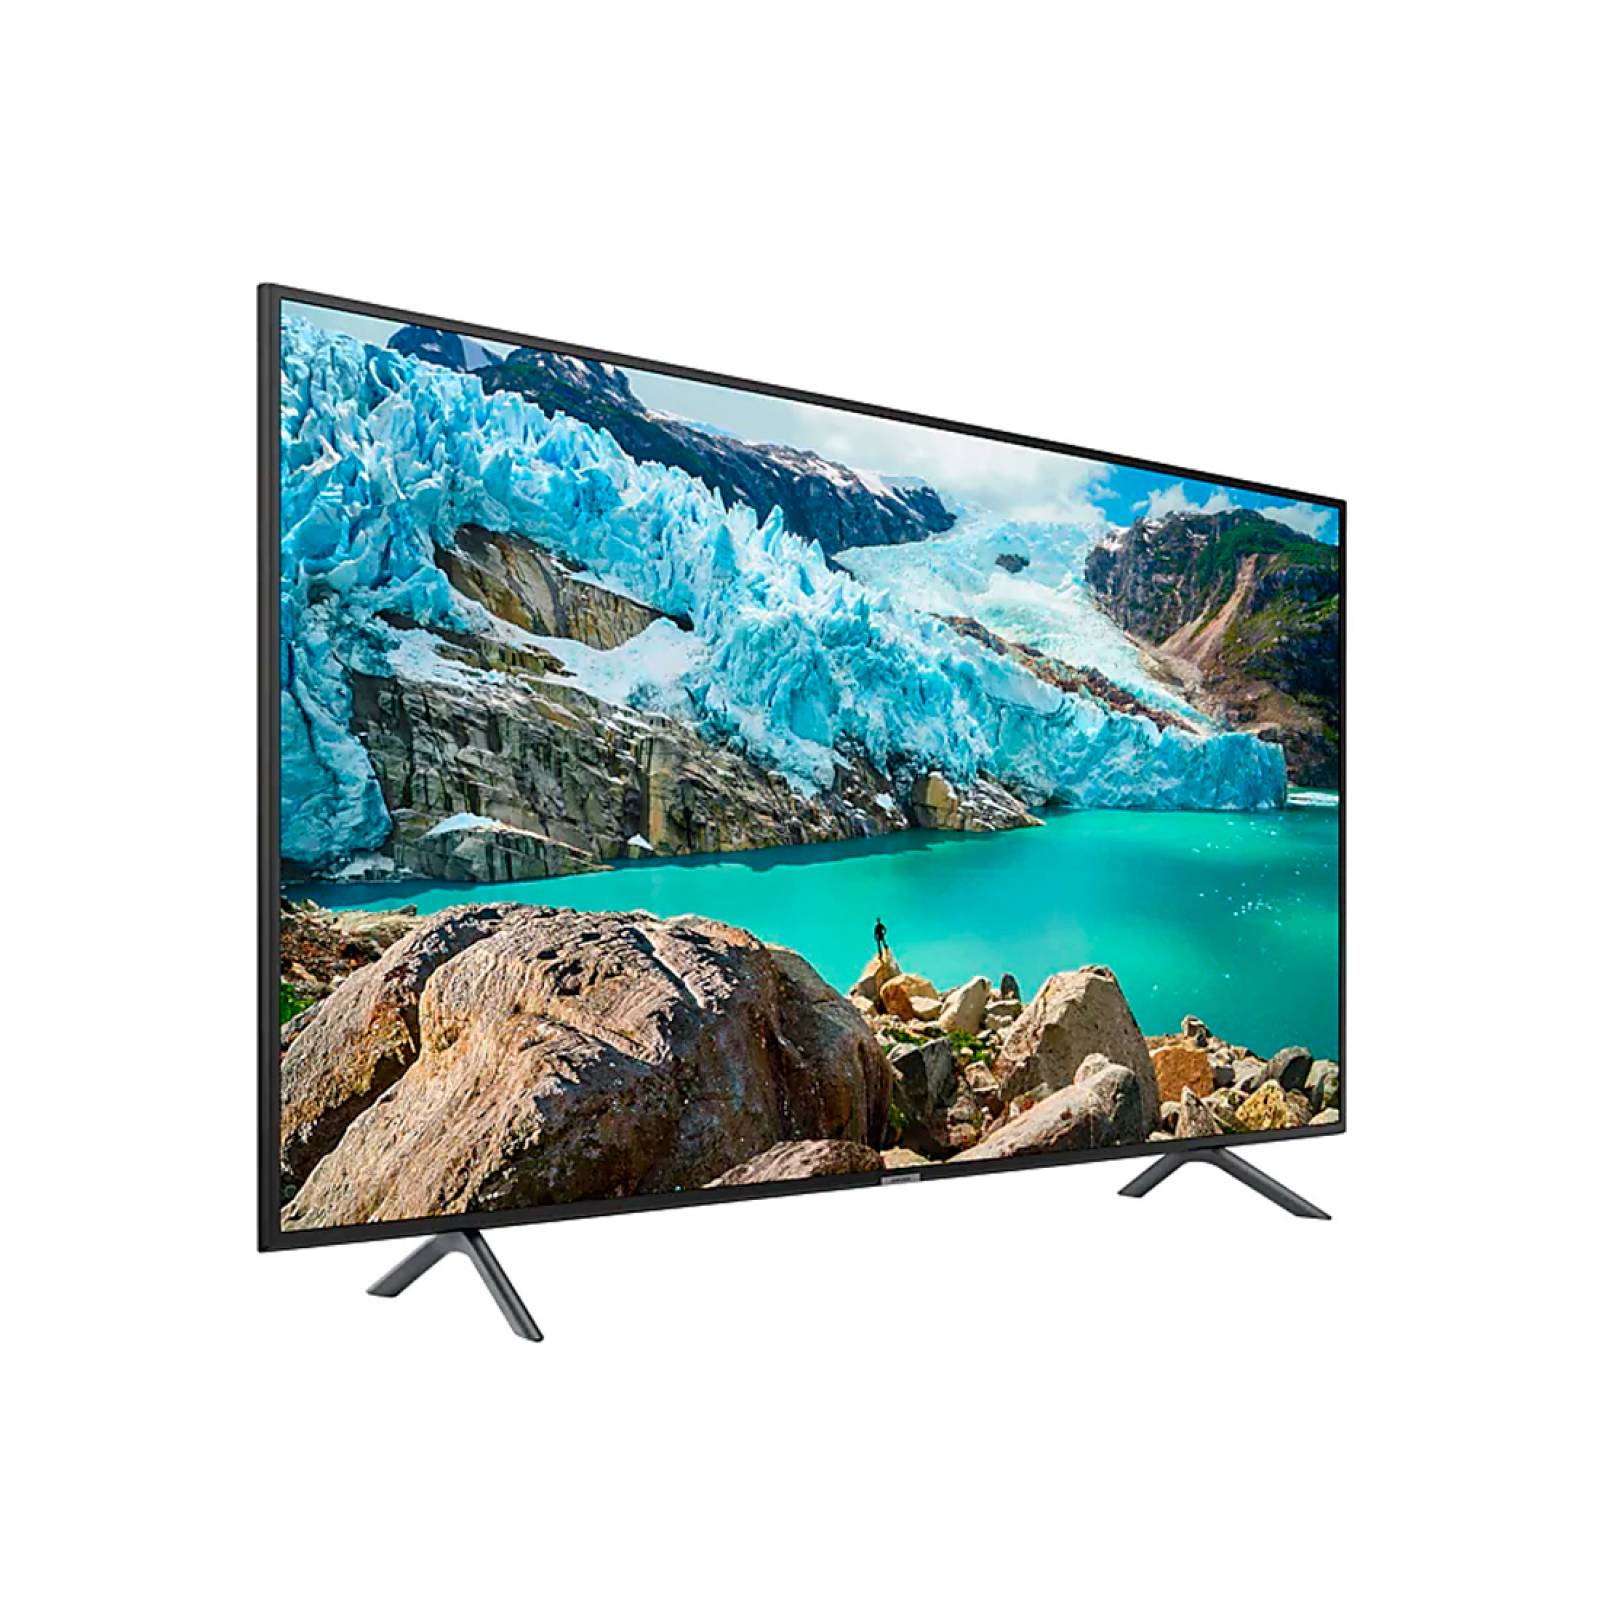 Smart TV 43 Pul LED 4K HDR 120Hz HDMI BT UN43RU7100 Samsung